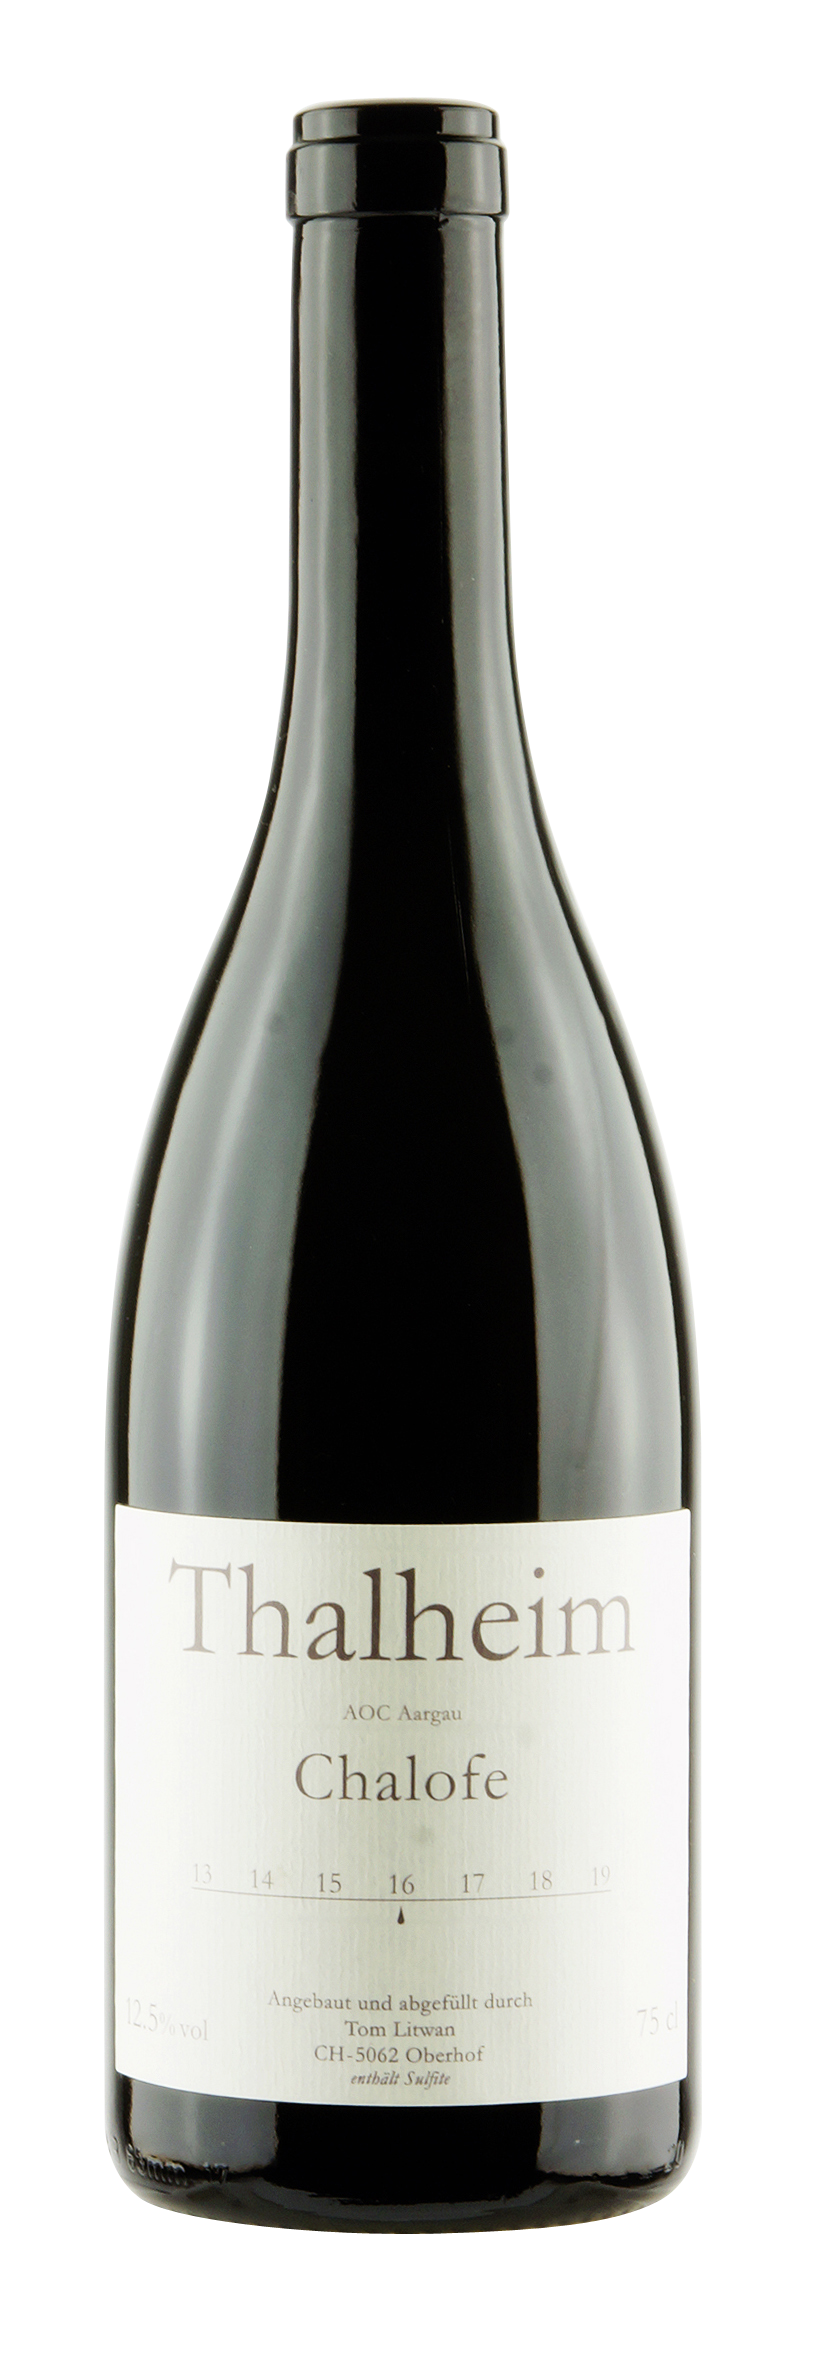 Aargau AOC Thalheim Pinot Noir Chalofe 2016